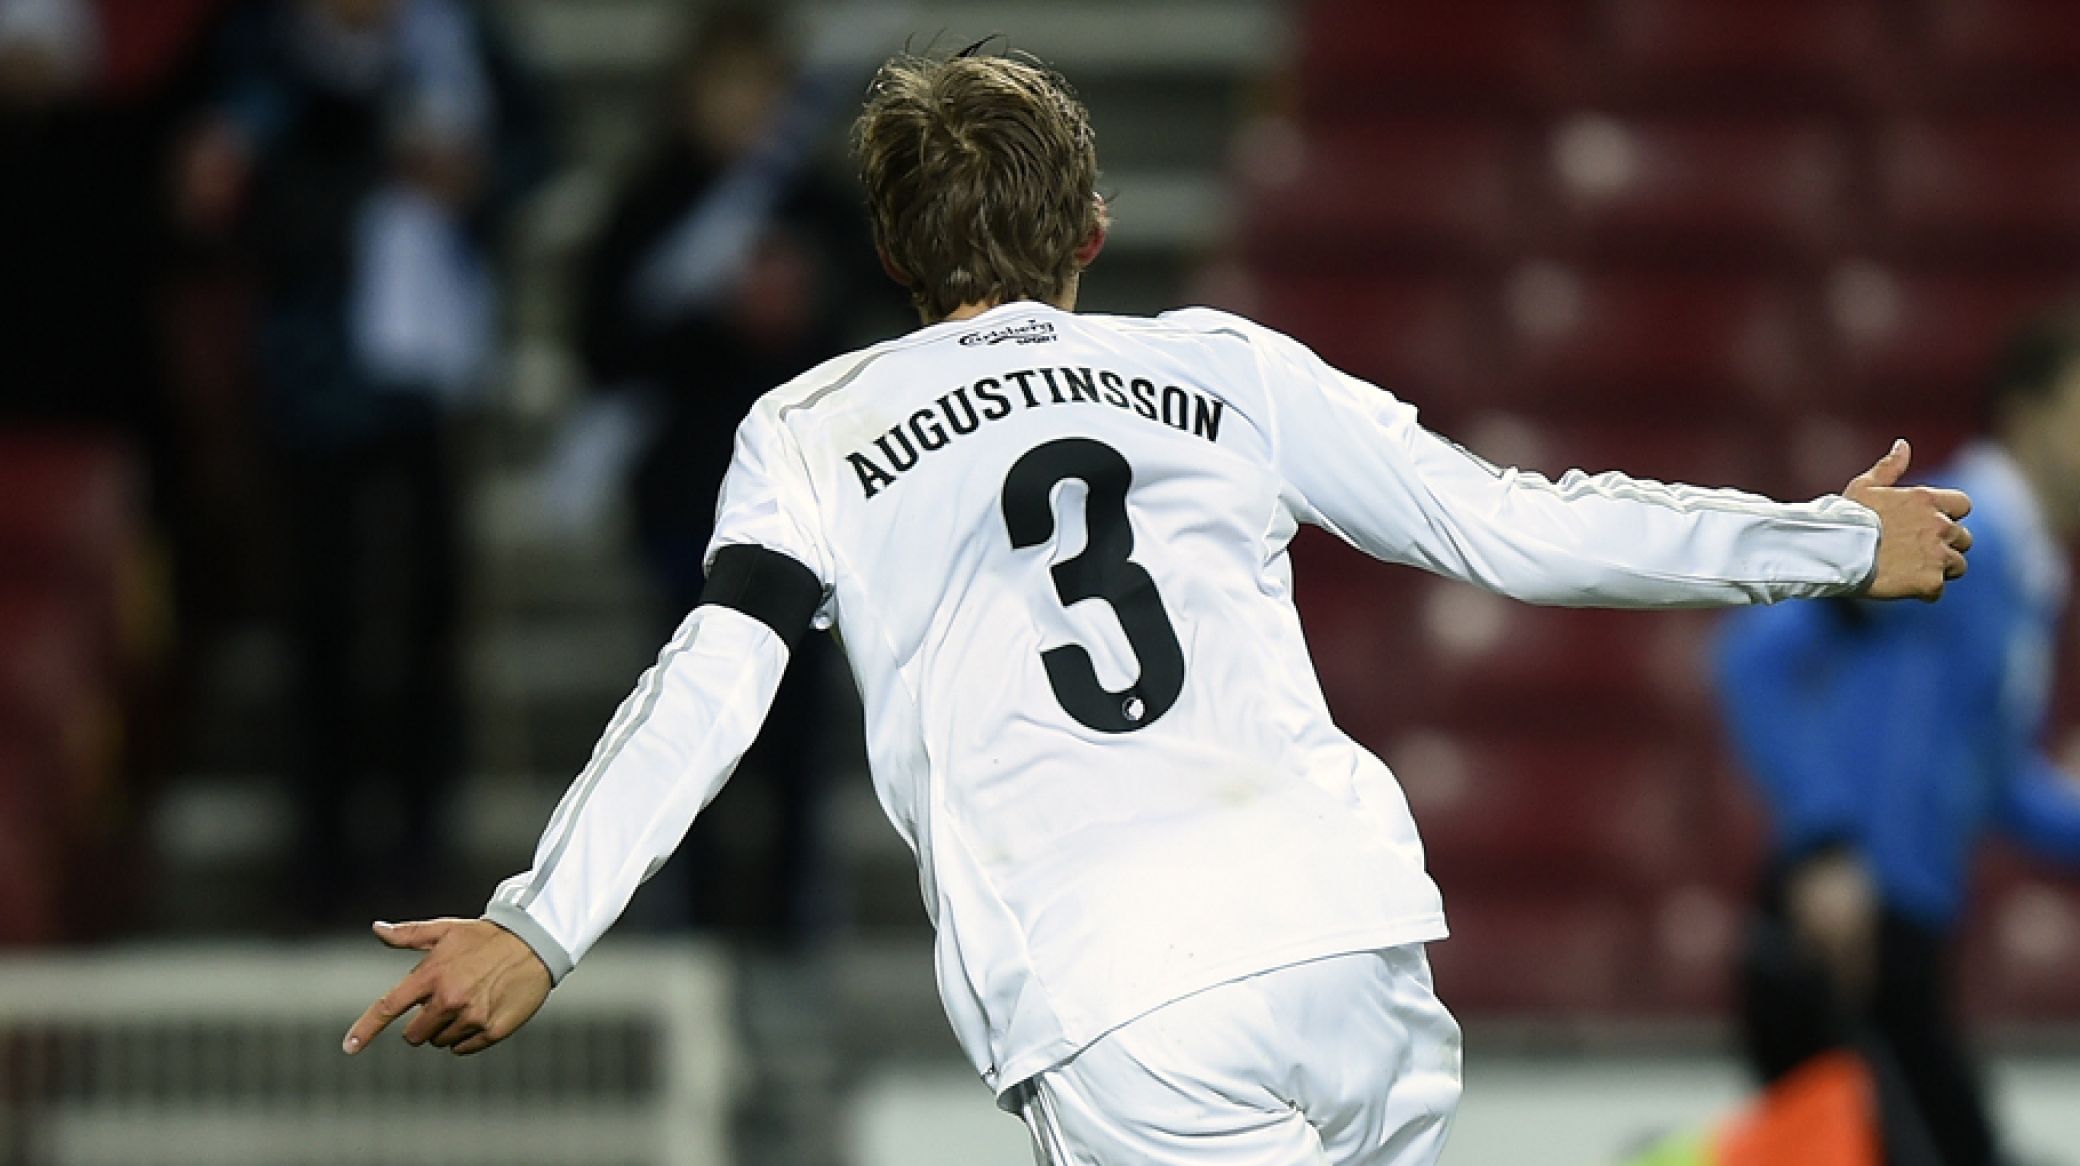 Augustinsson bags debut goal in FCK win